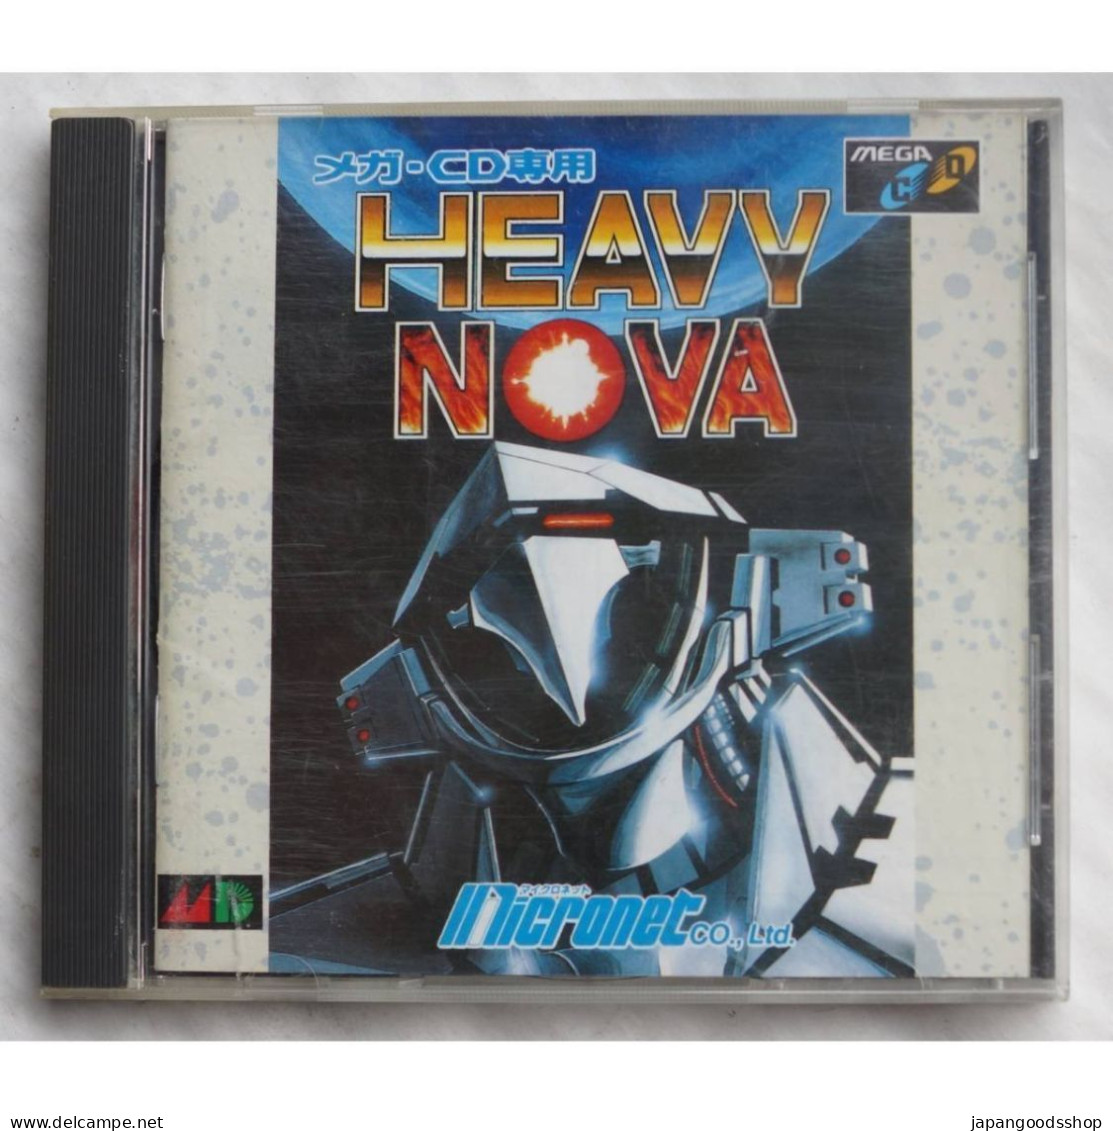 Mega CD Heavy Nova - Mega-CD